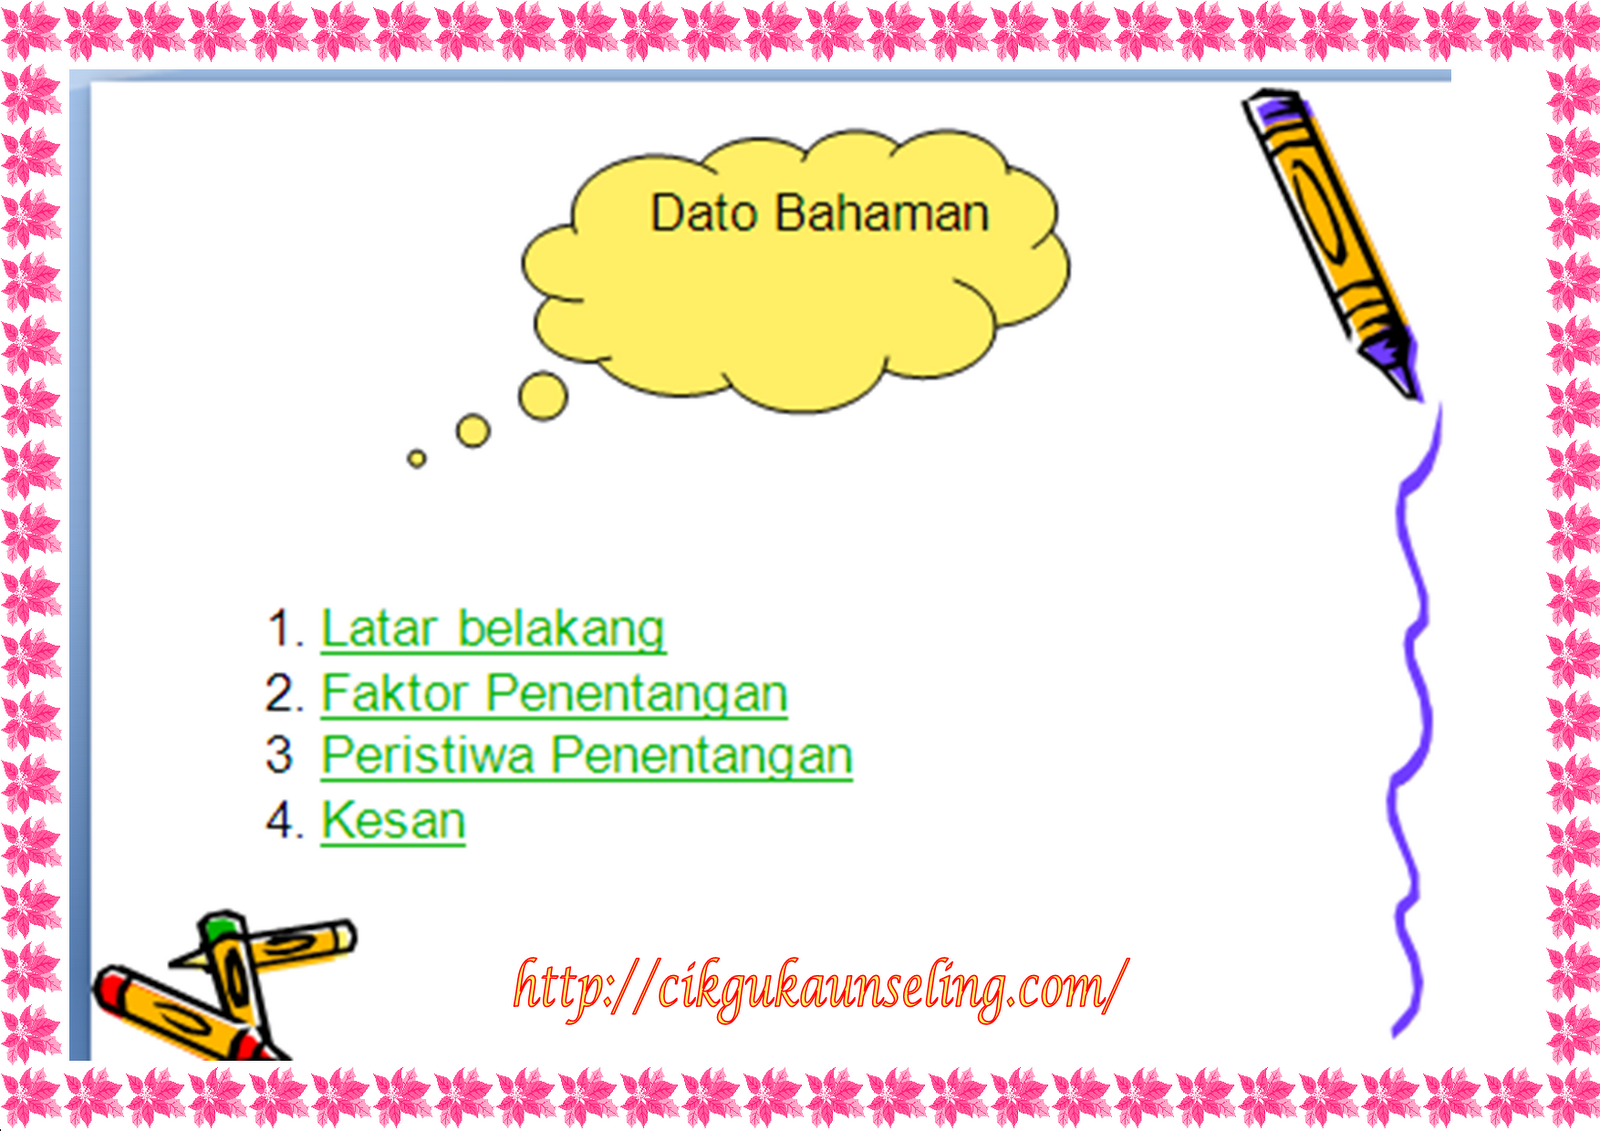 Sejarah Pahlawan Dato' Bahaman di Pahang